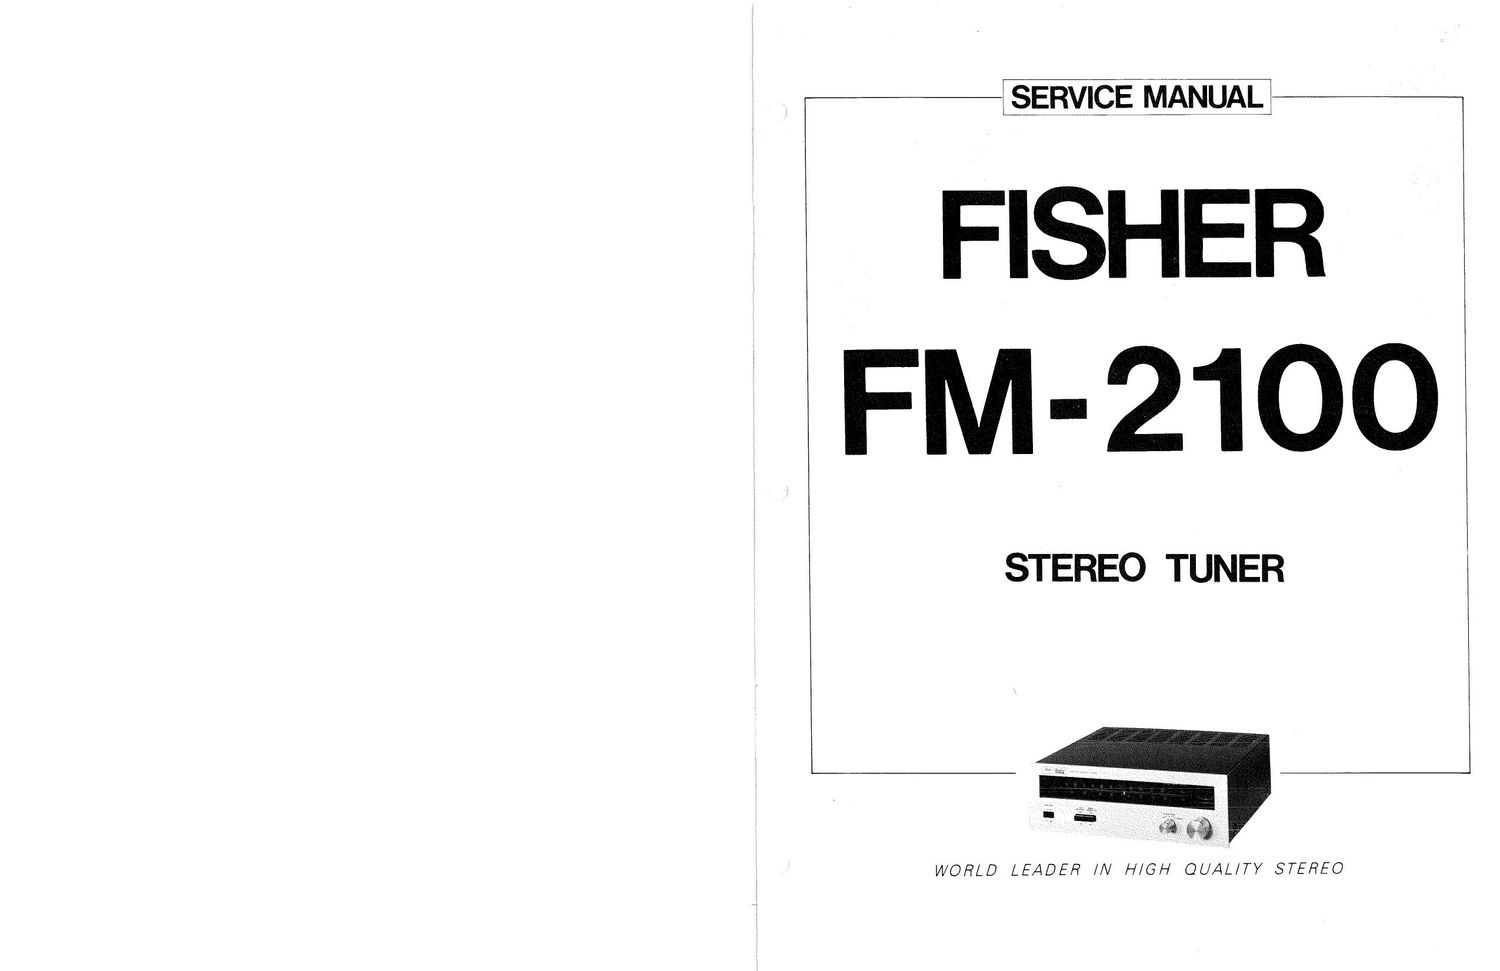 Fisher FM 2100 Service Manual